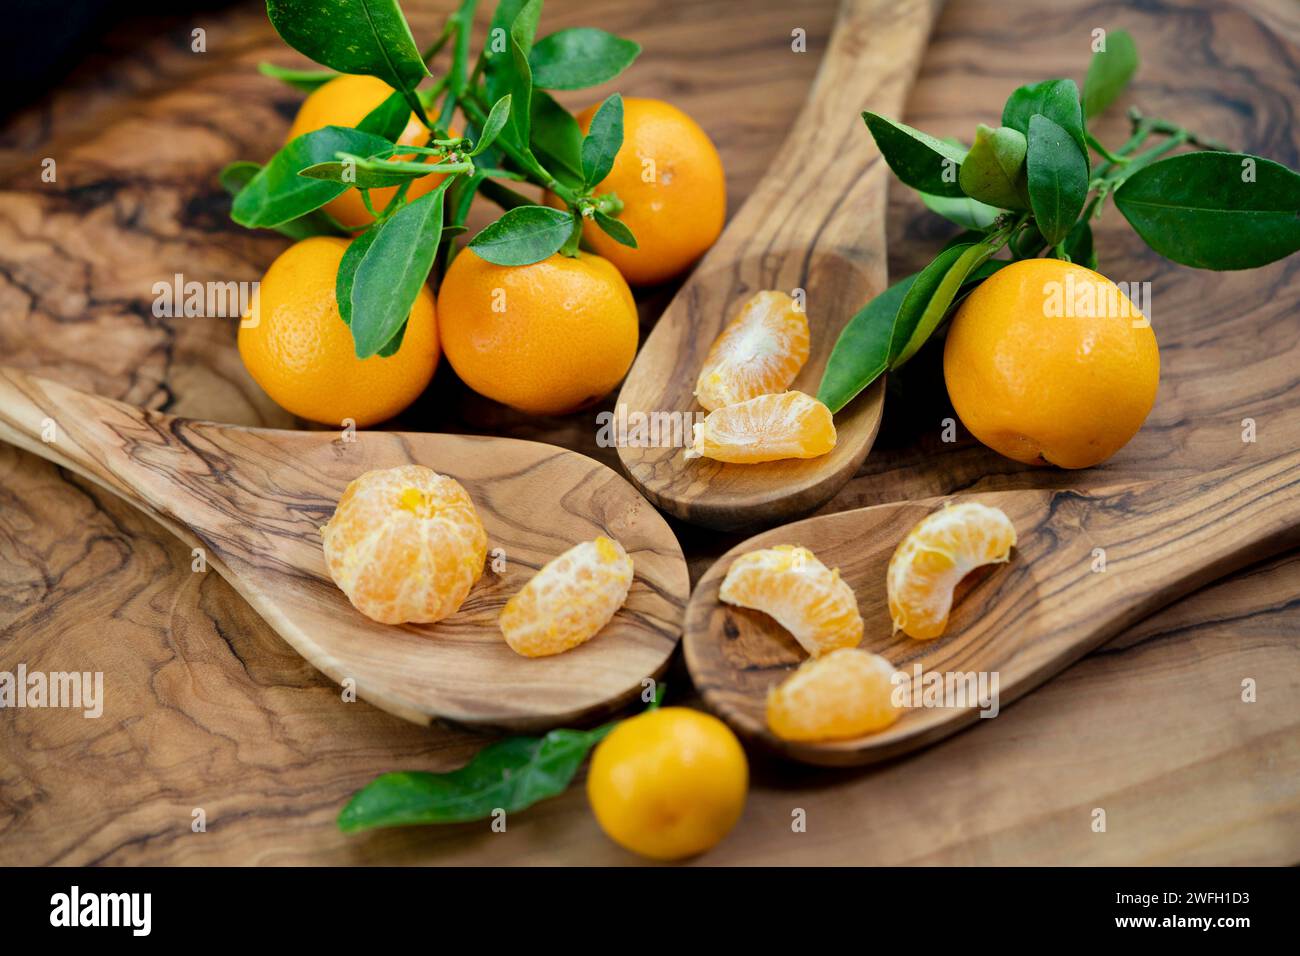 Calamondin, Calomondin, Camalmansi (Citrus madurensis, Citrofortunella microcarpa, Citrus fortunella, Citrus mitis), Fruit on wooden spoons on the tab Stock Photo